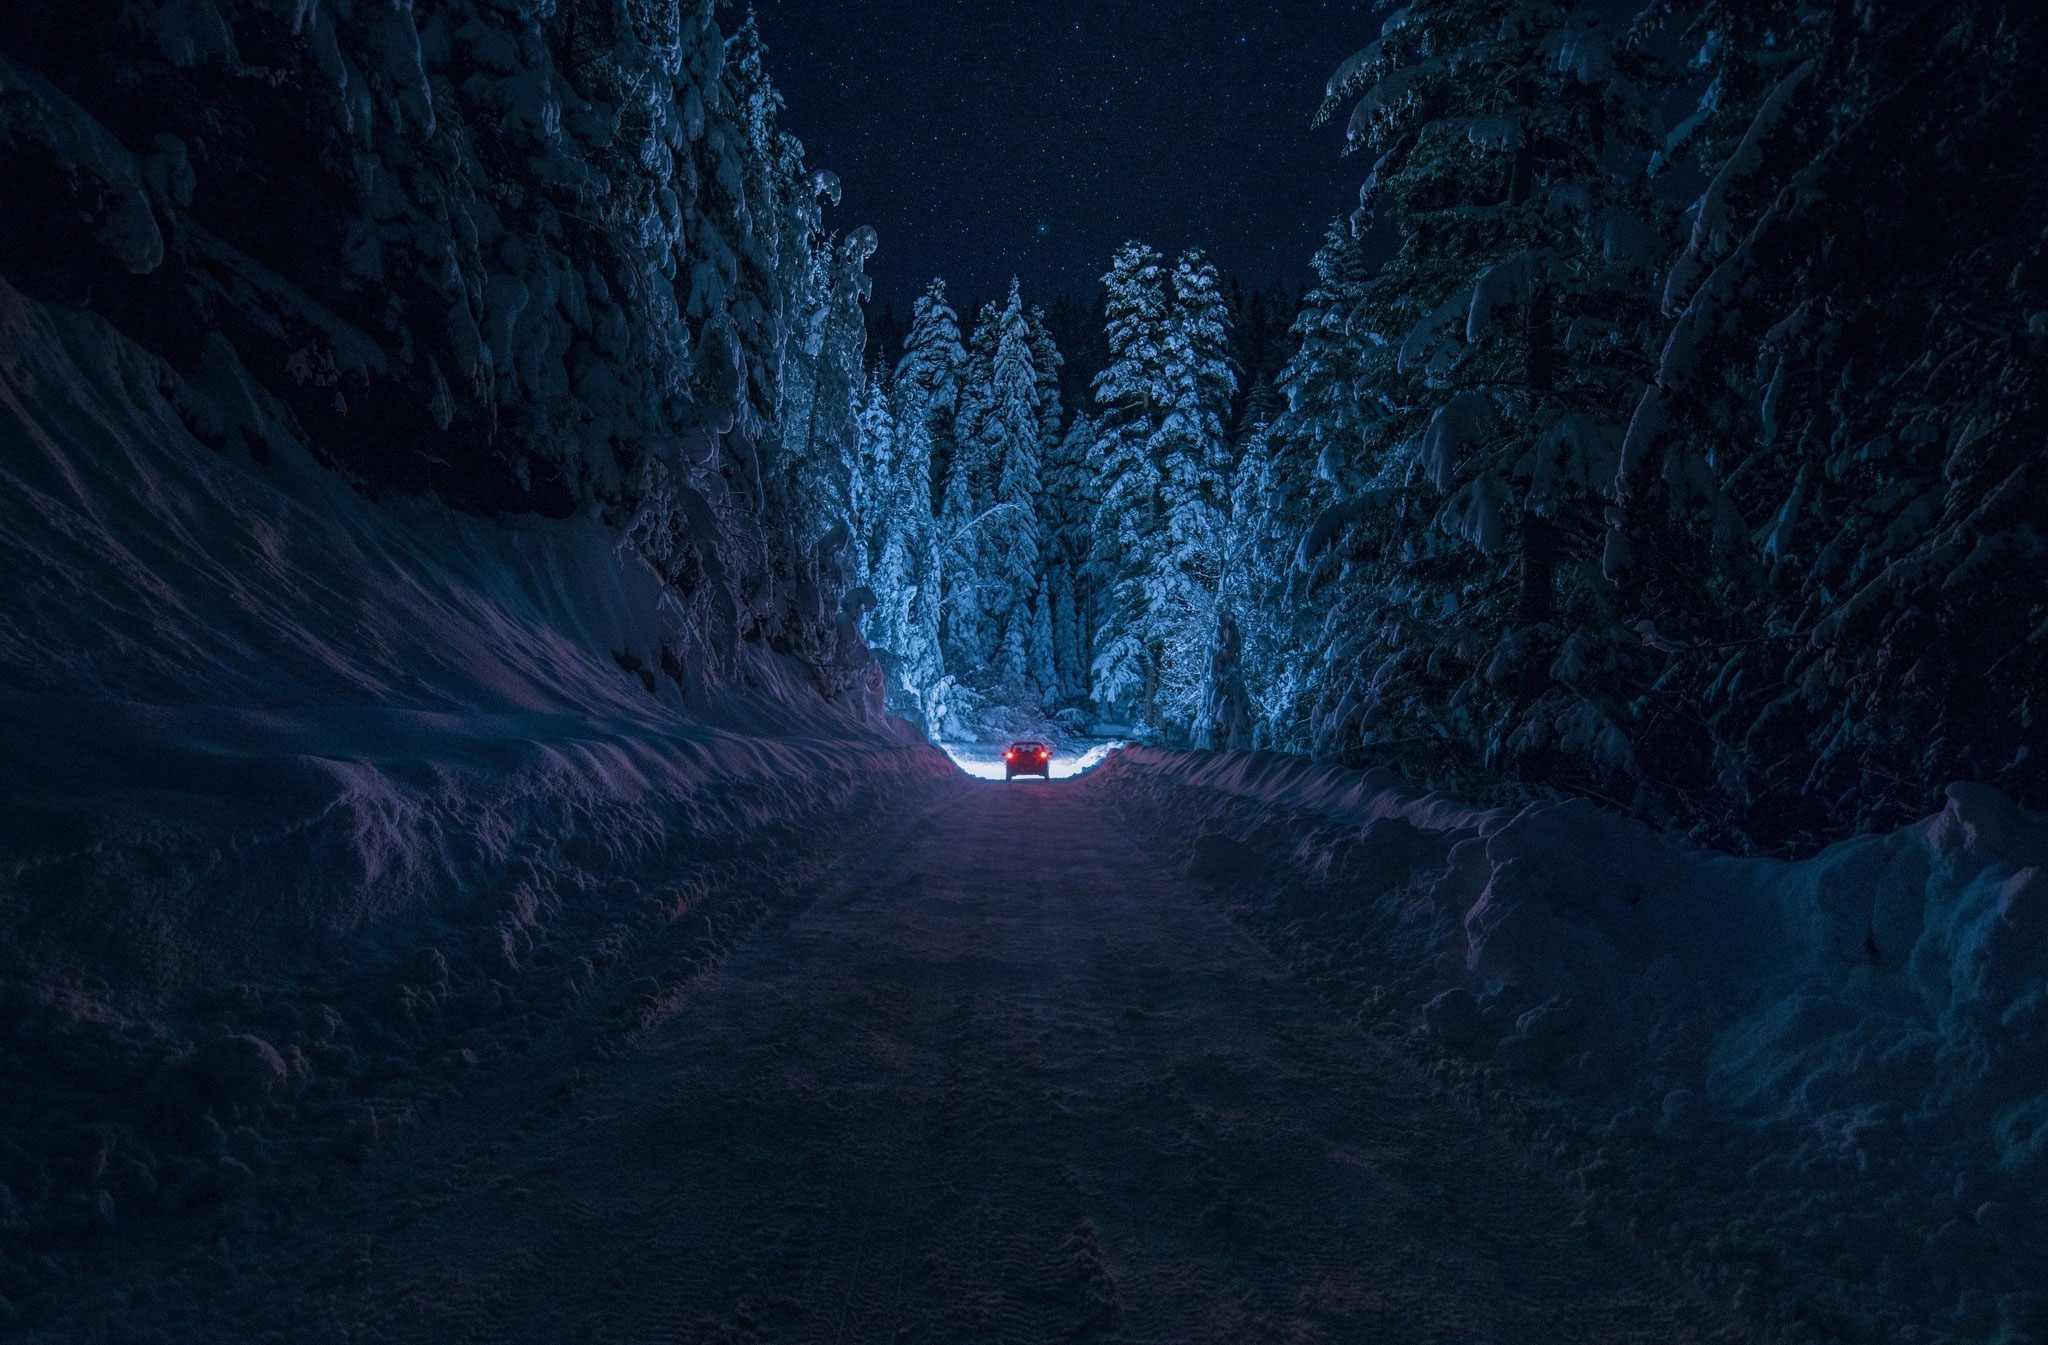 Зимняя заснеженная дорога в лесу, с удаляющимся автомобилем